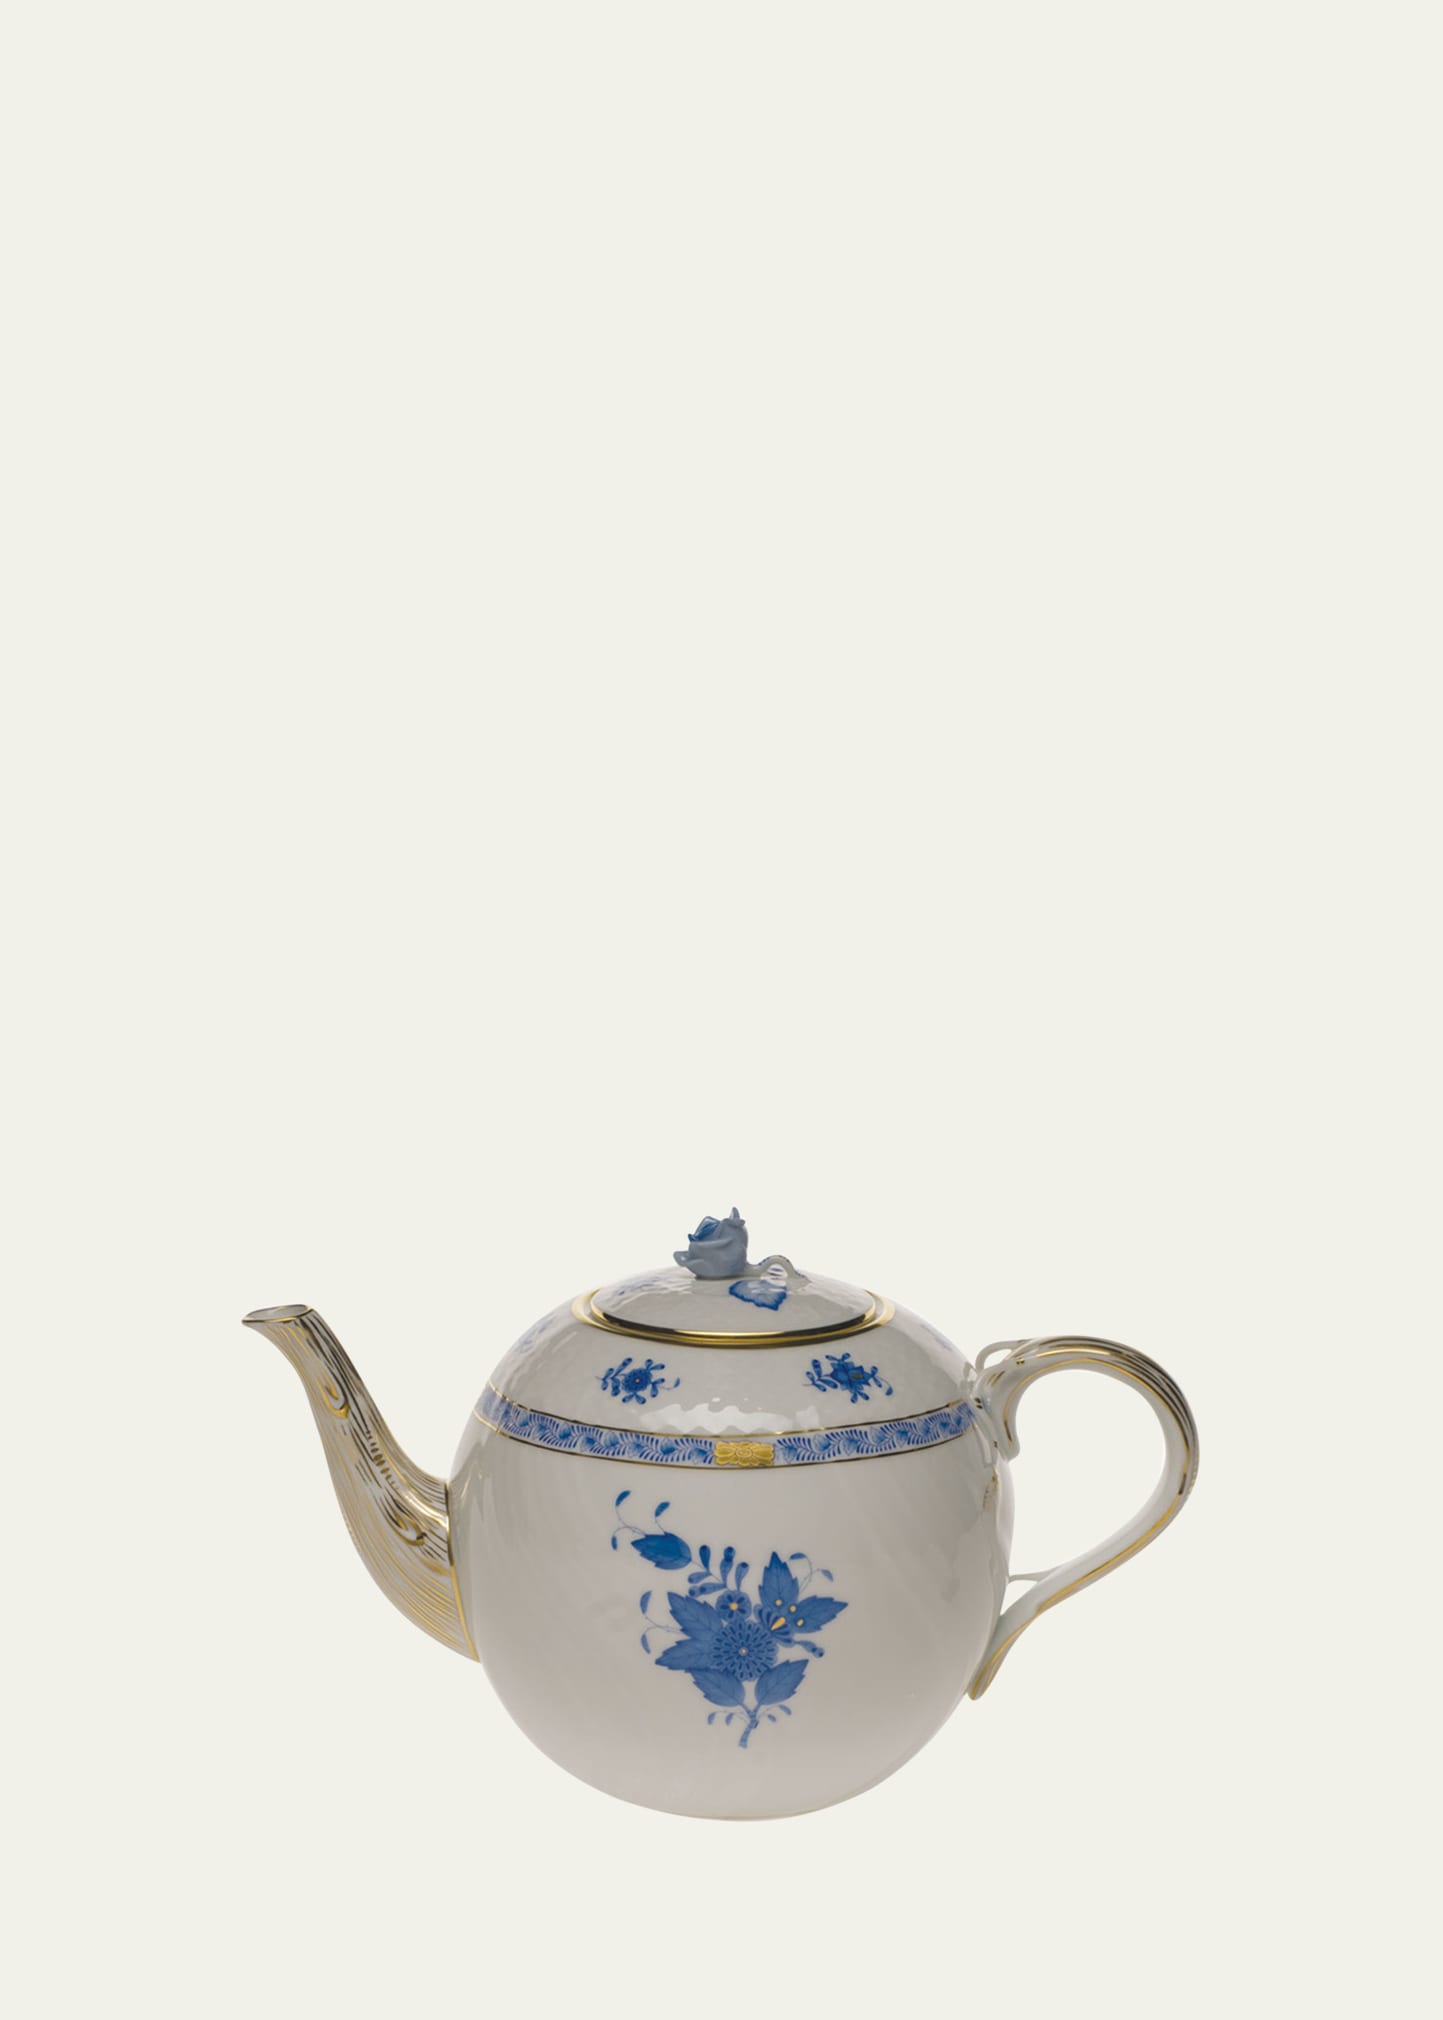 Rothschild Bird Teapot with Rose